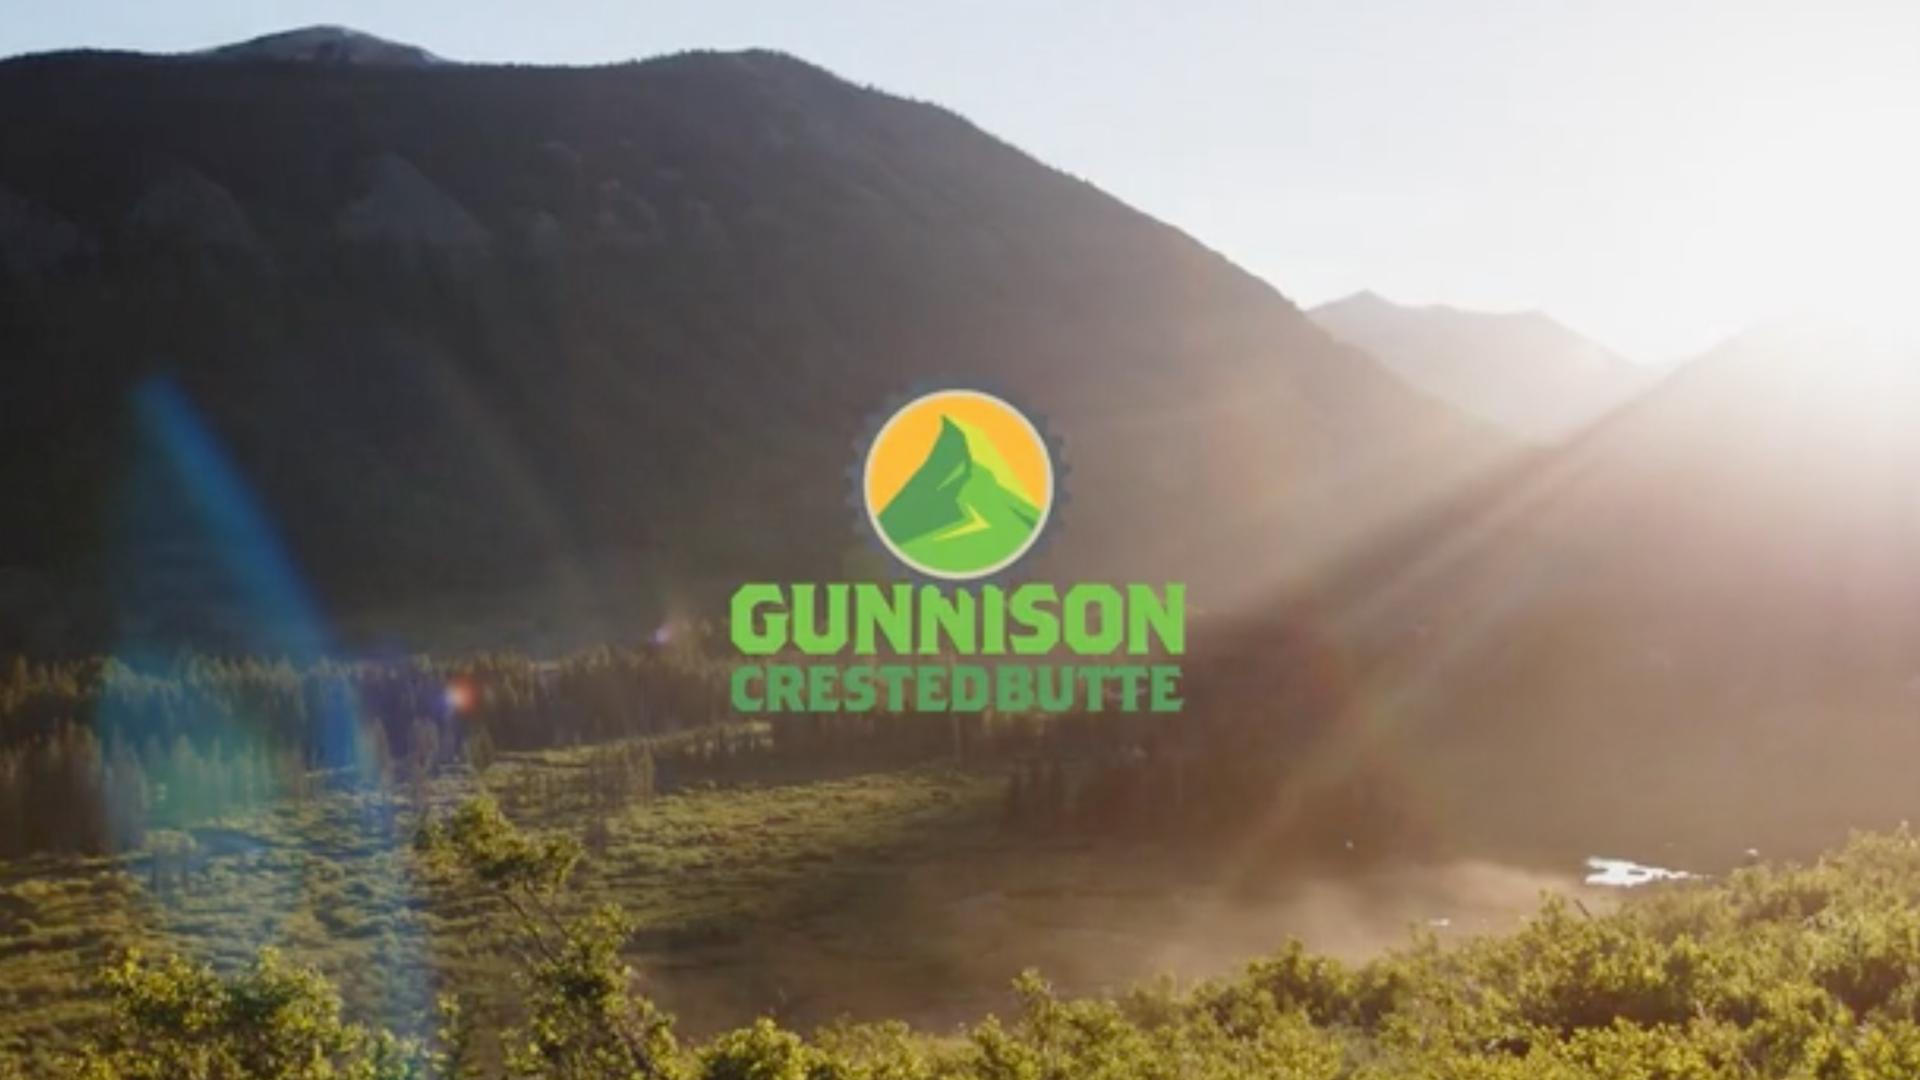 CBFF Sponsor: Gunnison-Crested Butte Tourism Association